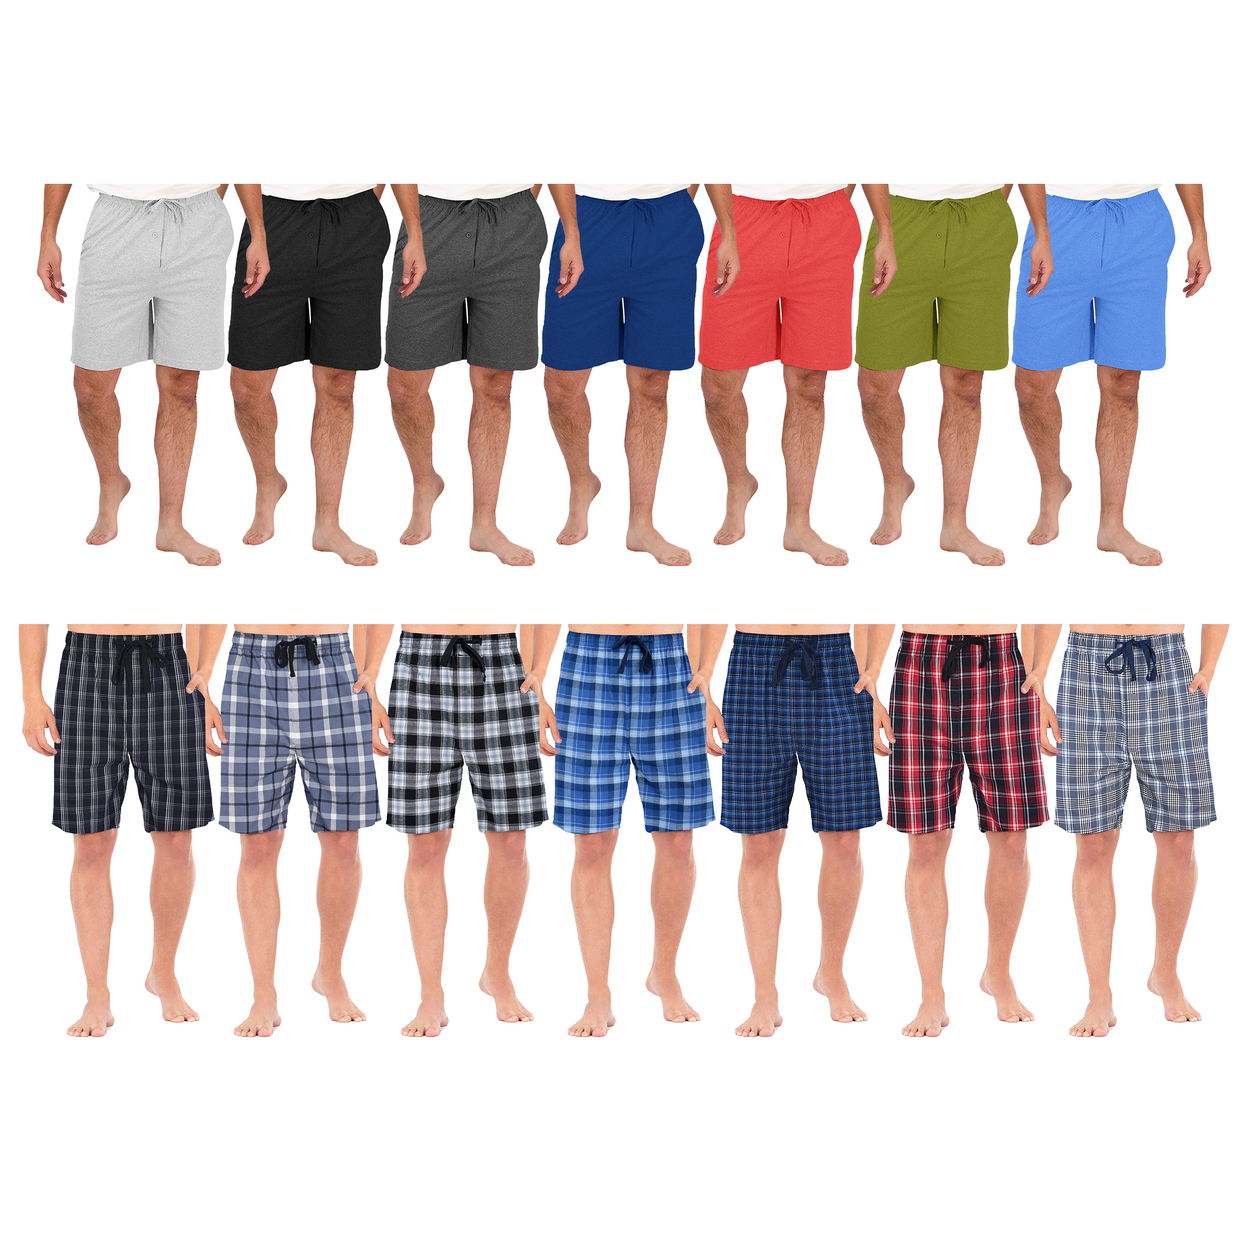 2-Pack: Men's Ultra Soft Knit Lounge Pajama Sleep Shorts - Solid, Medium